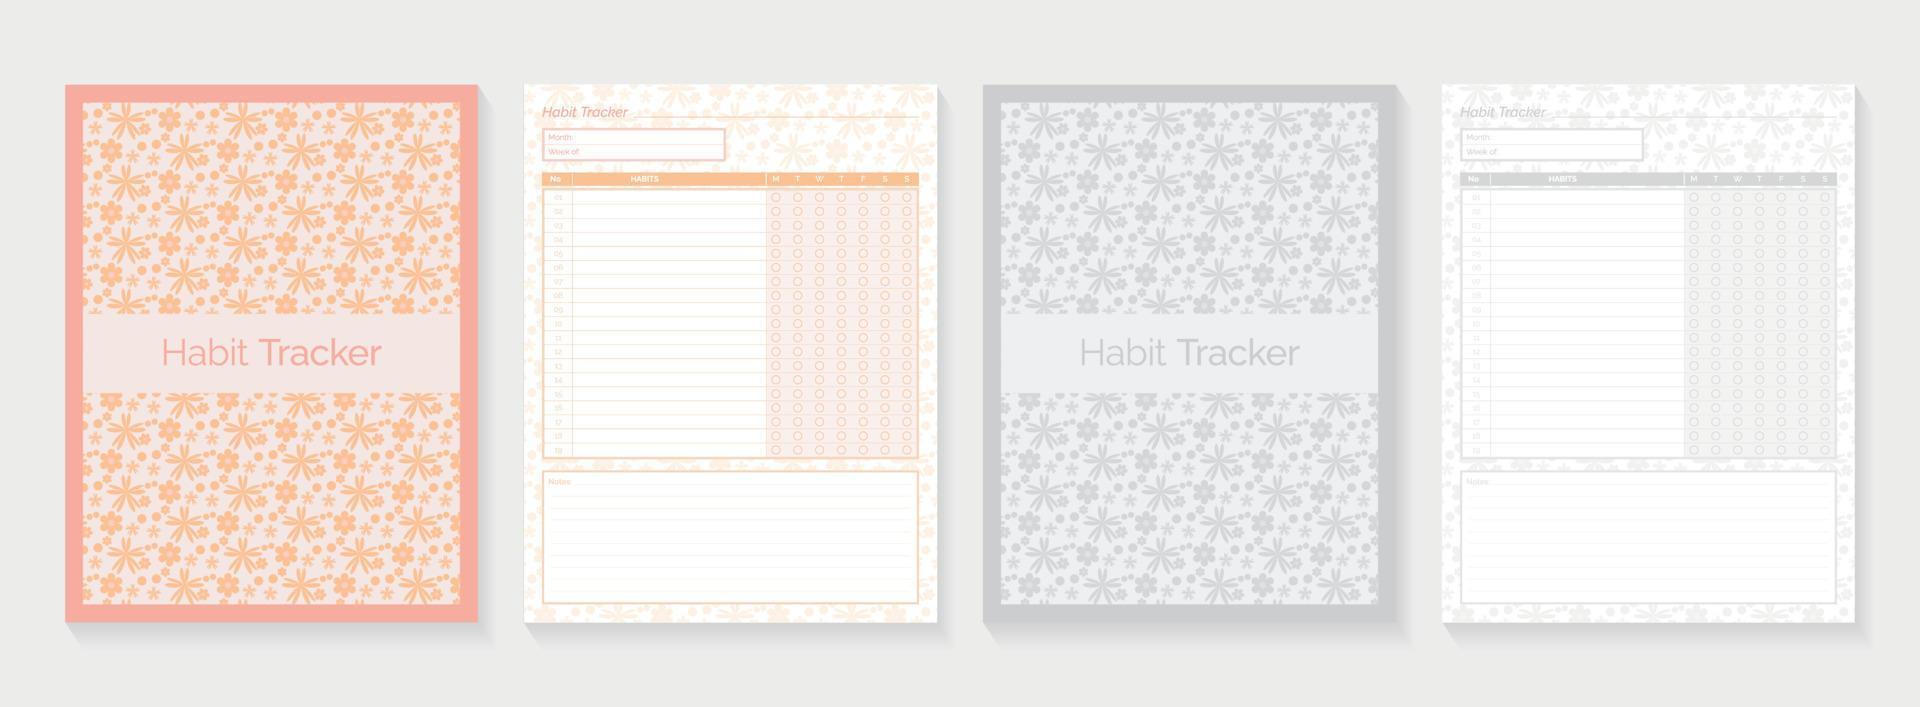 Habit Tracker Planner with pink flower background vector